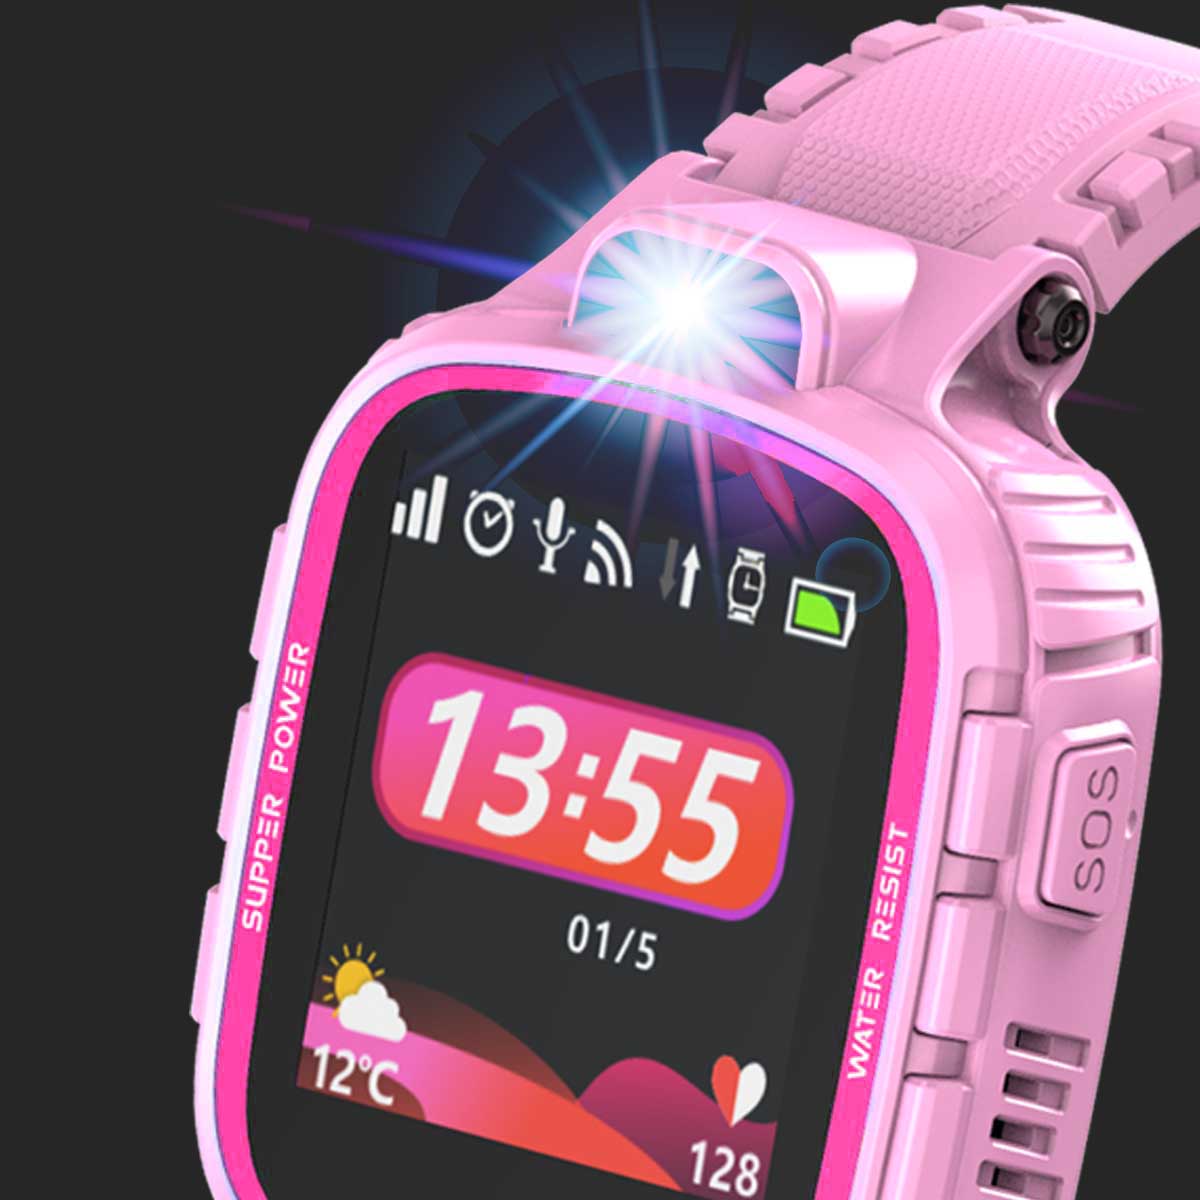 Reloj GPS Infantil Rosa G300 - PRIXTON